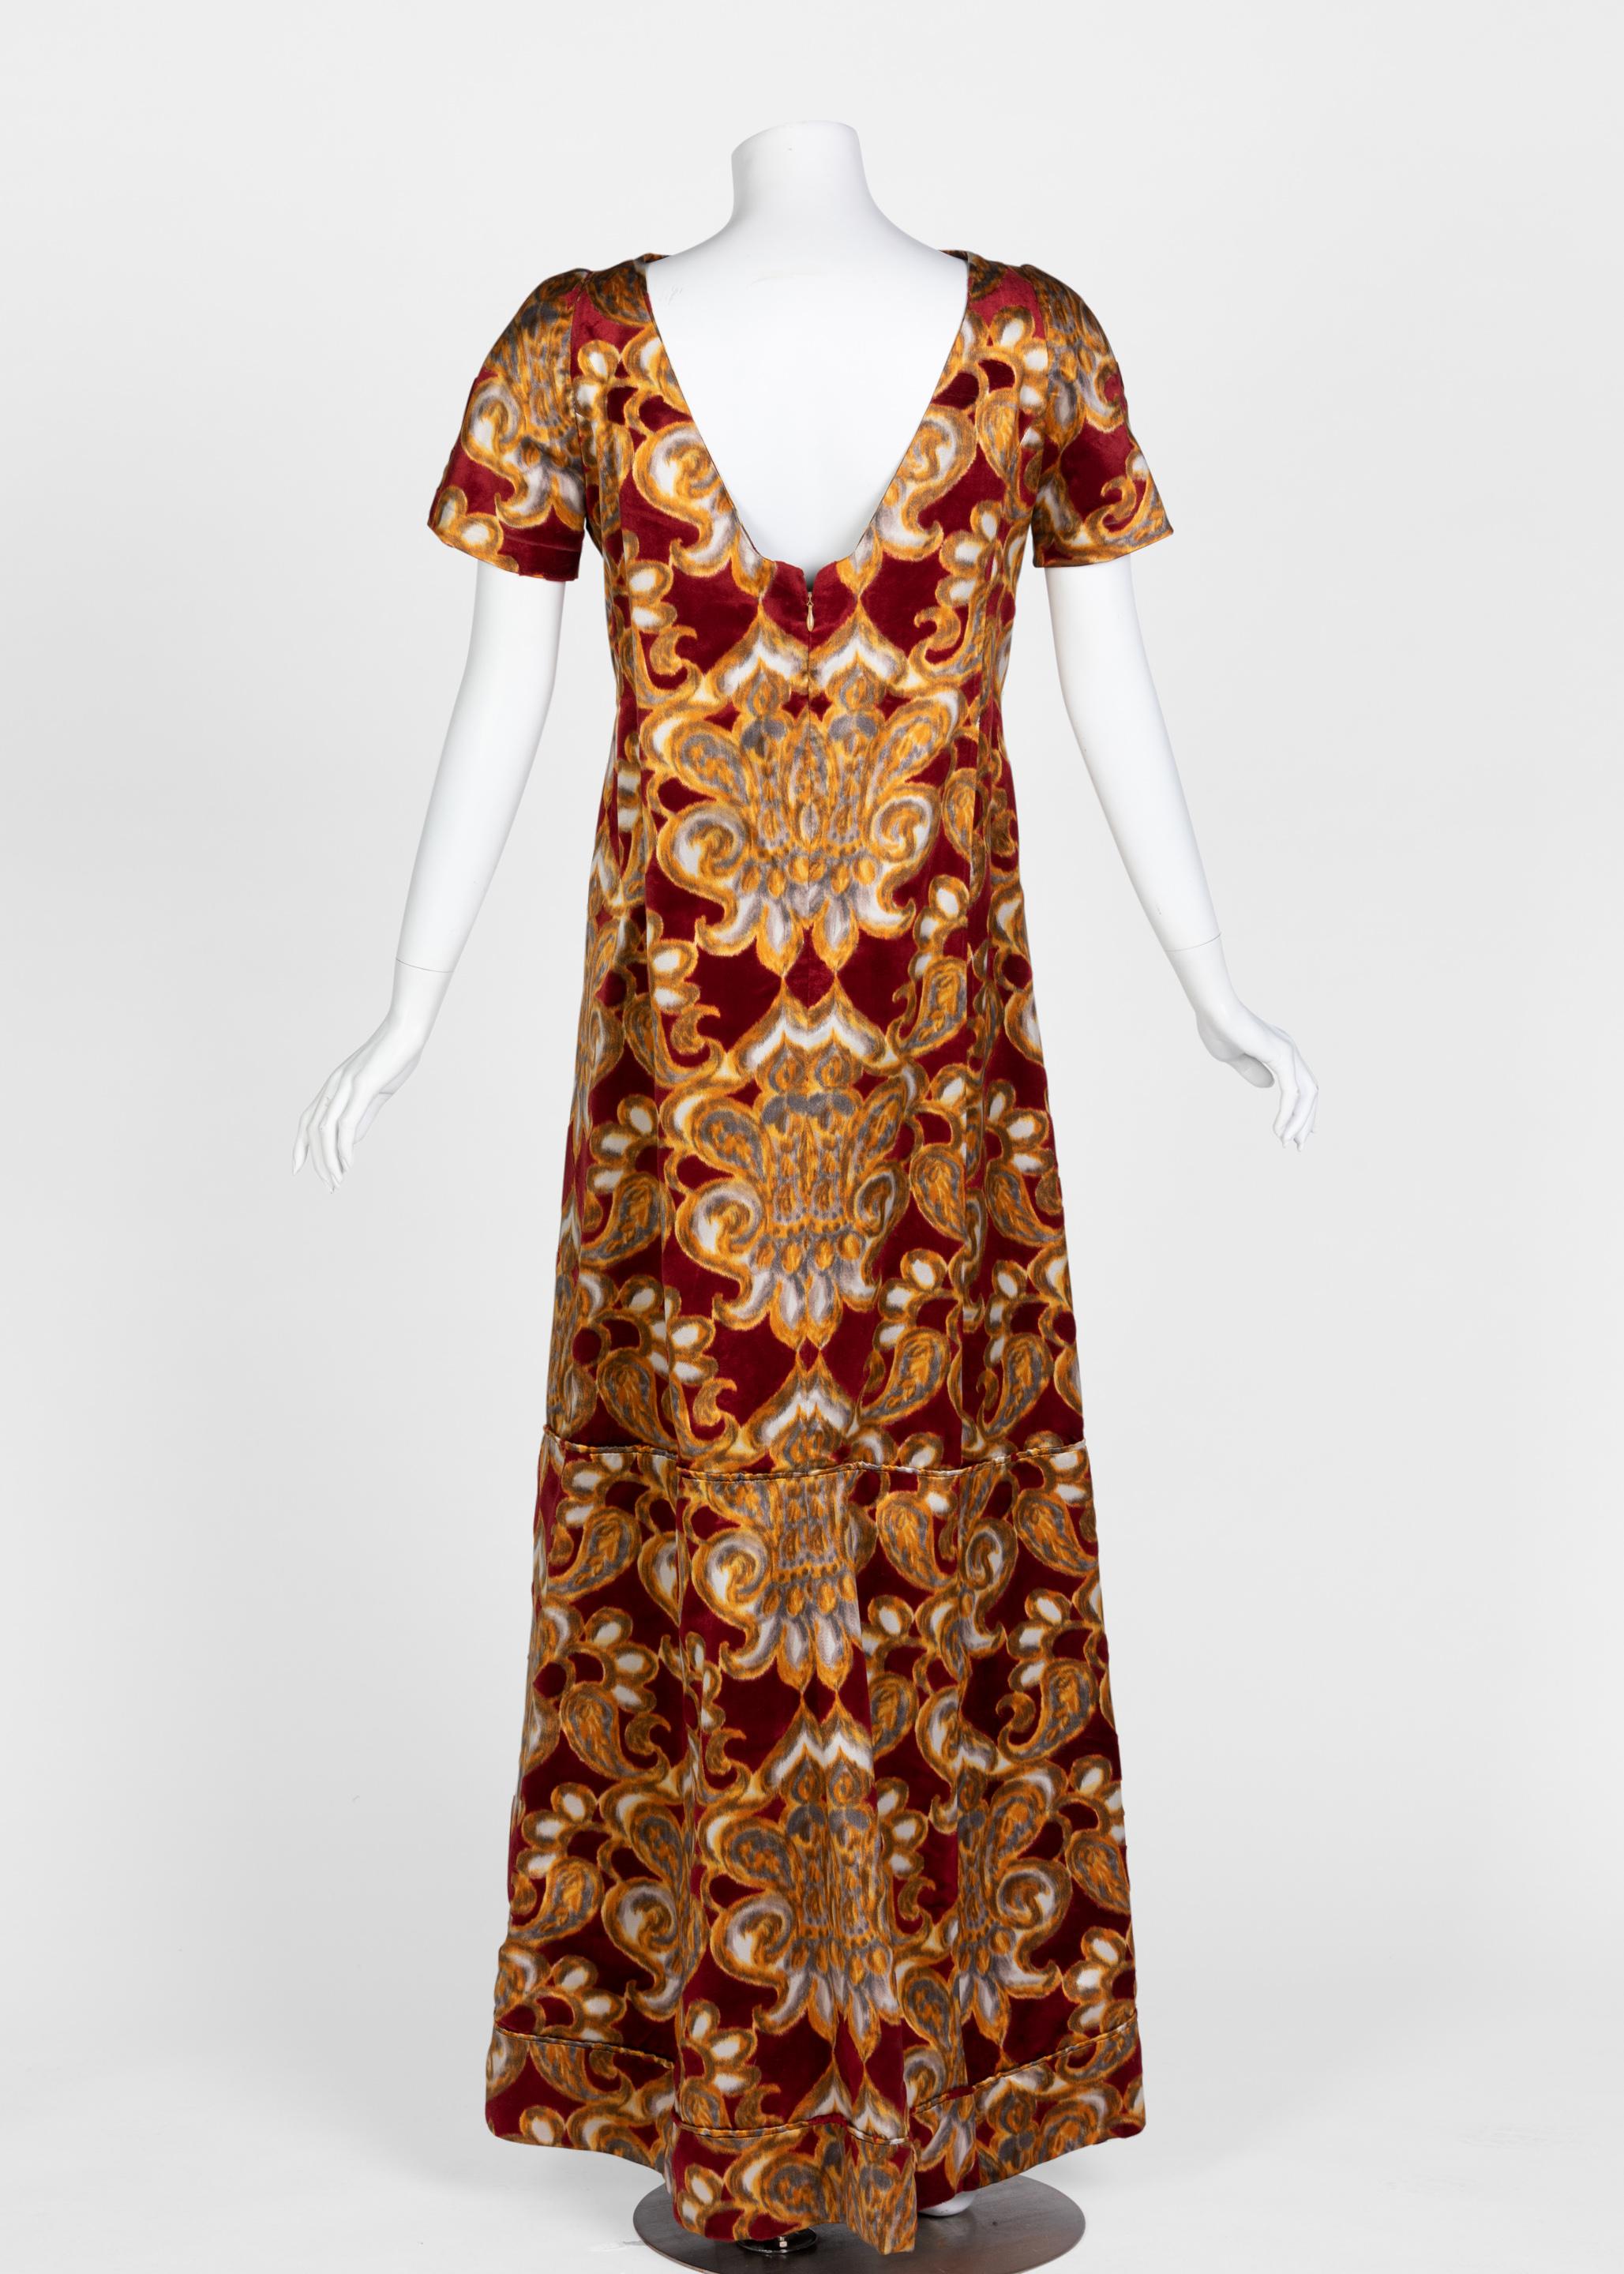 Women's or Men's Galanos Couture Red Gold Velvet Fur Trimmed Coat & Dress Ensemble, 1982 For Sale